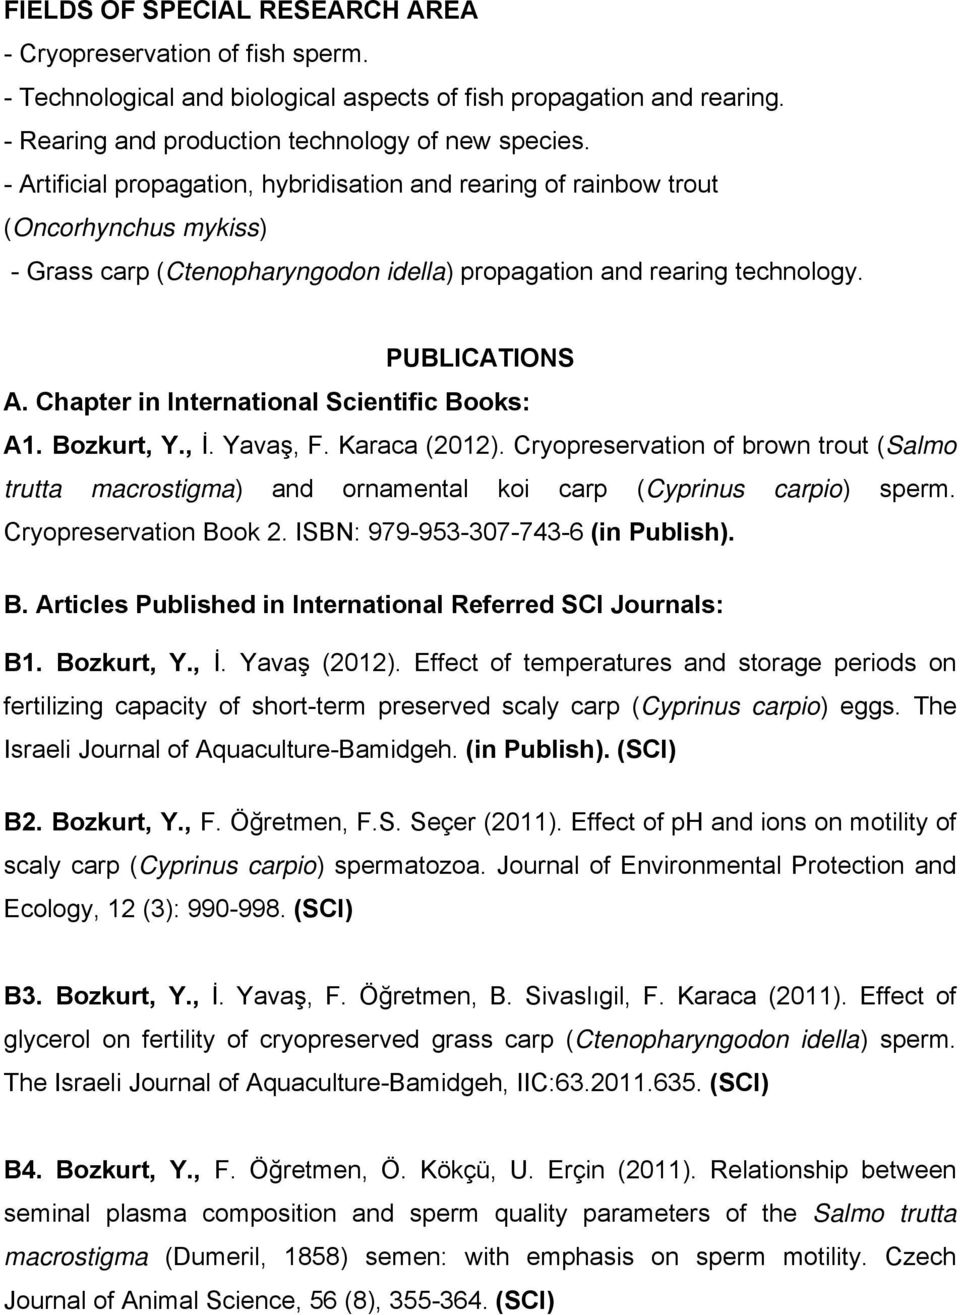 Chapter in International Scientific Books: A1. Bozkurt, Y., İ. Yavaş, F. Karaca (2012). Cryopreservation of brown trout (Salmo trutta macrostigma) and ornamental koi carp (Cyprinus carpio) sperm.